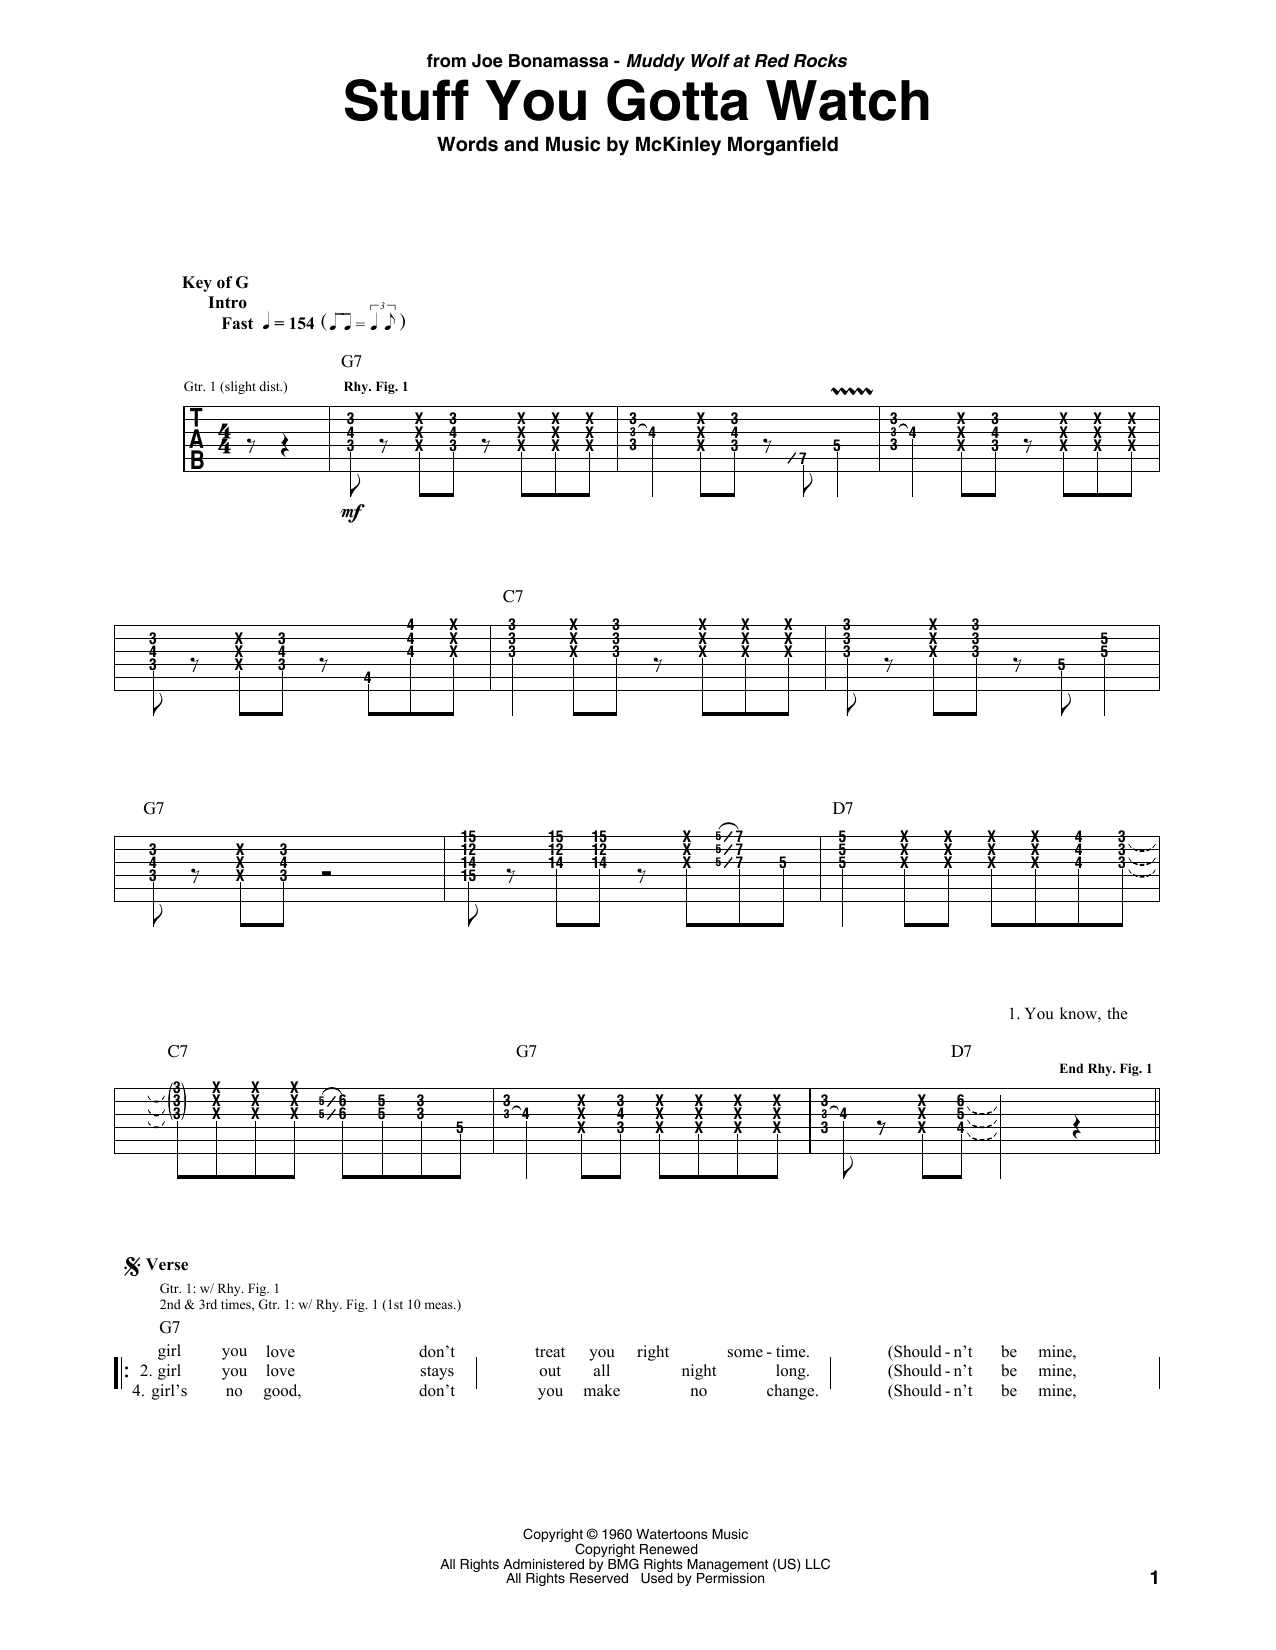 Download Joe Bonamassa Stuff You Gotta Watch Sheet Music and learn how to play Guitar Tab PDF digital score in minutes